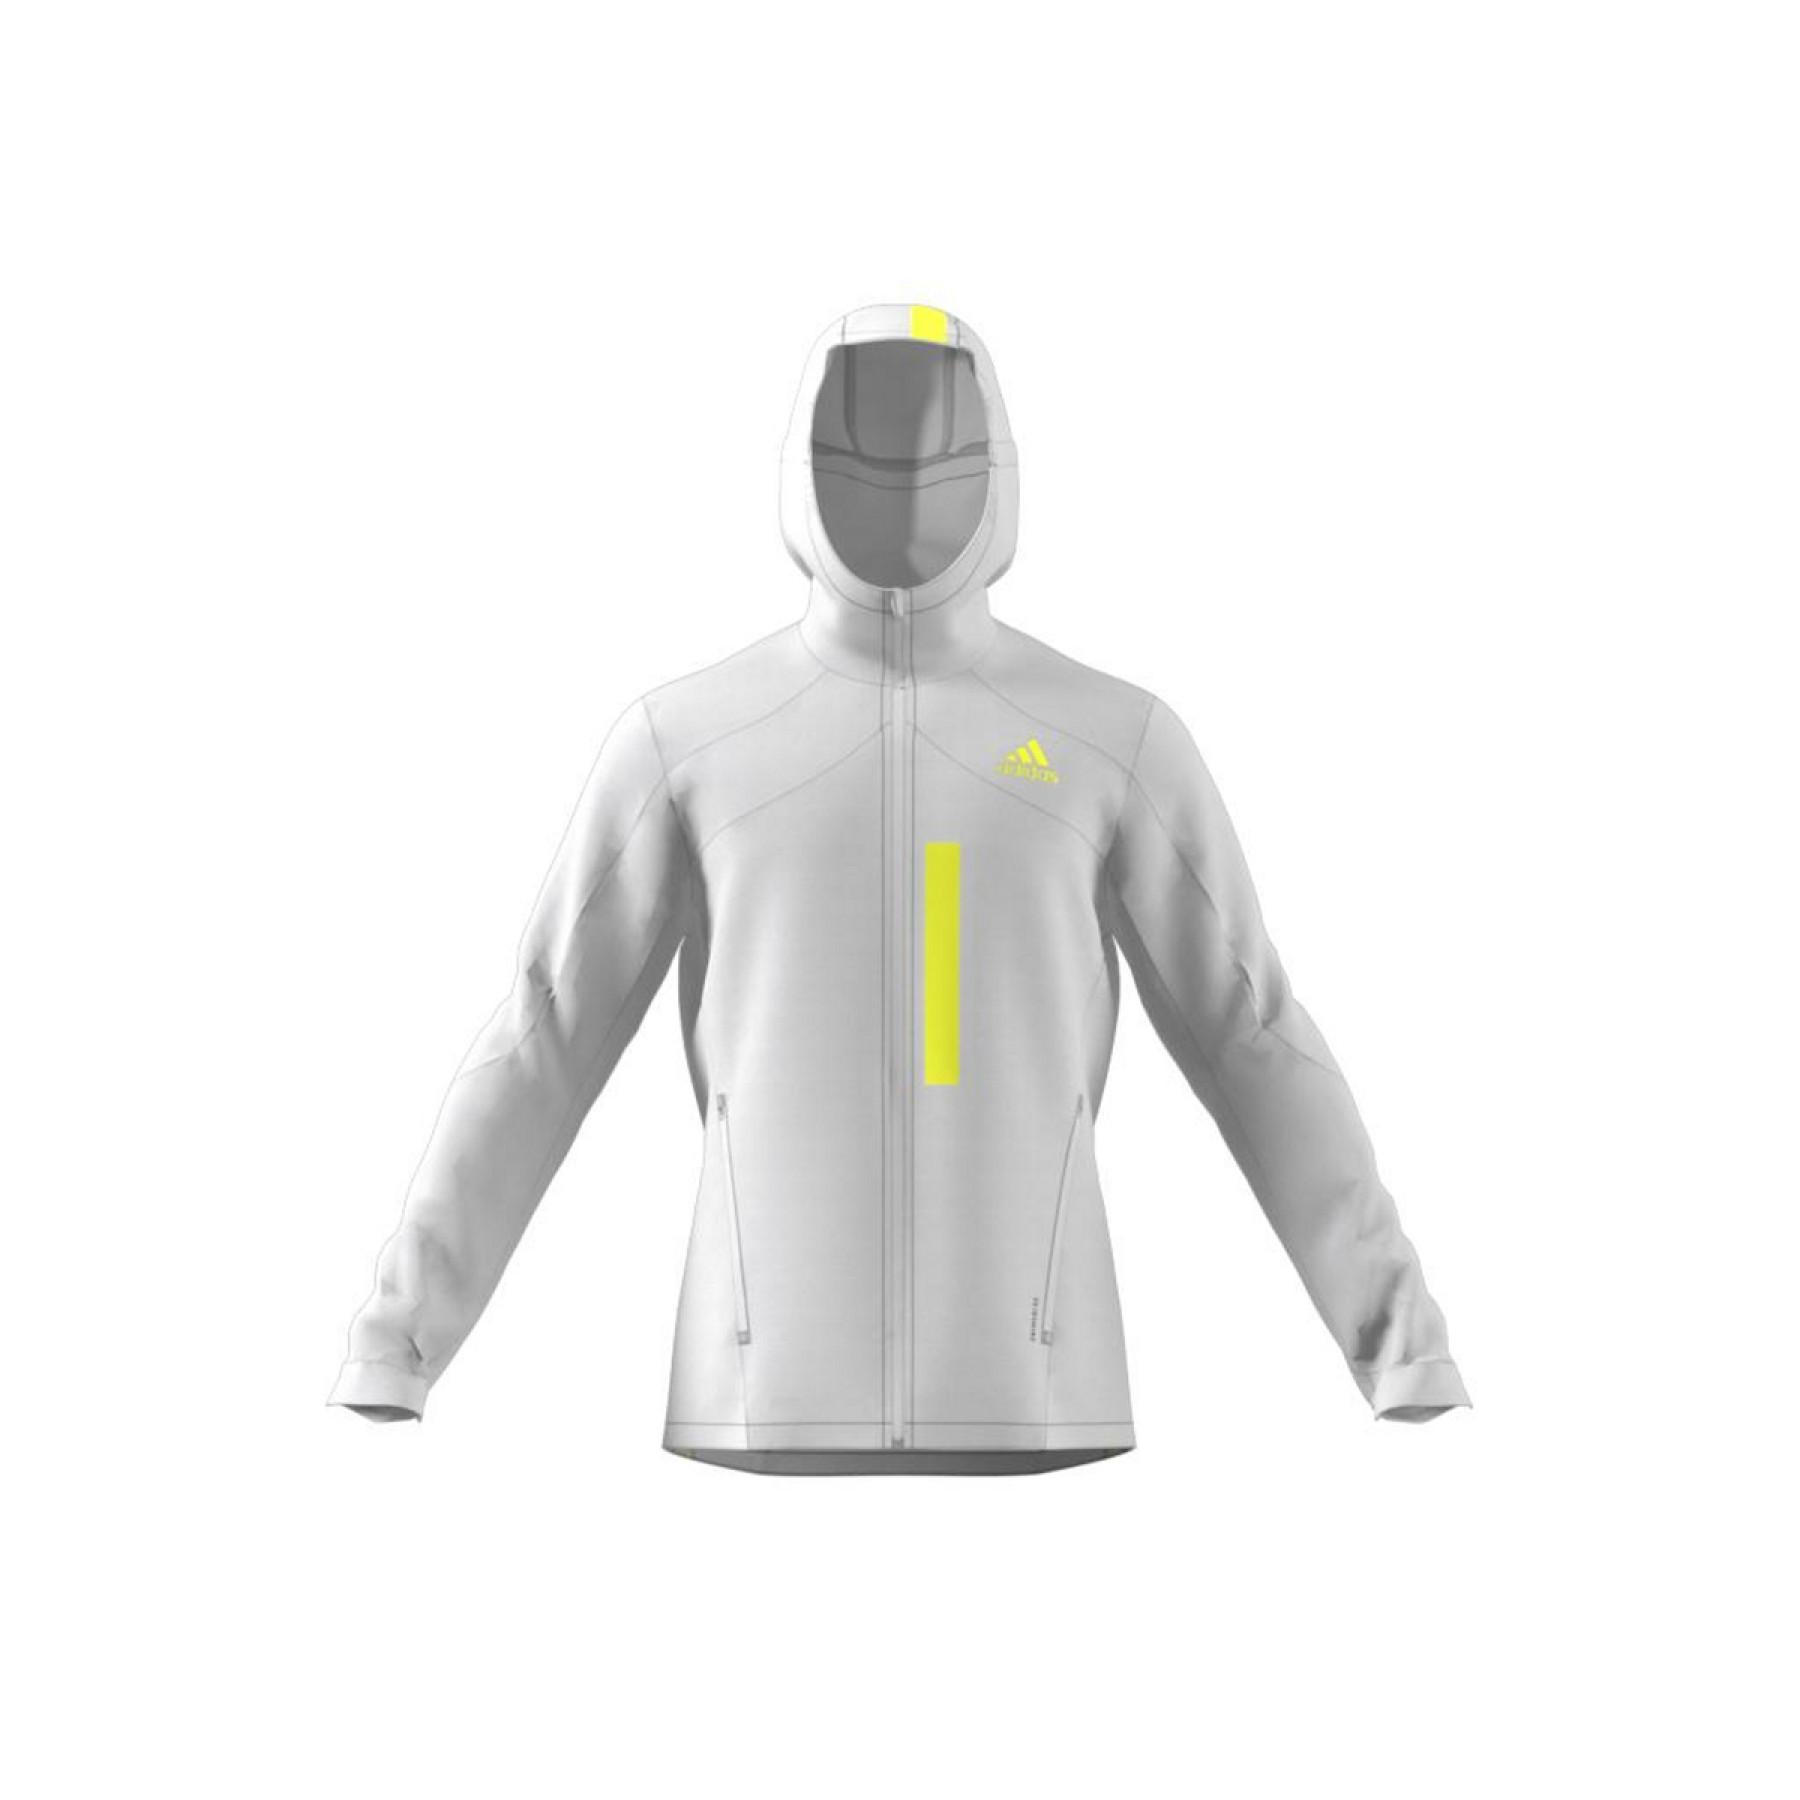 Jacka adidas Marathon Translucent